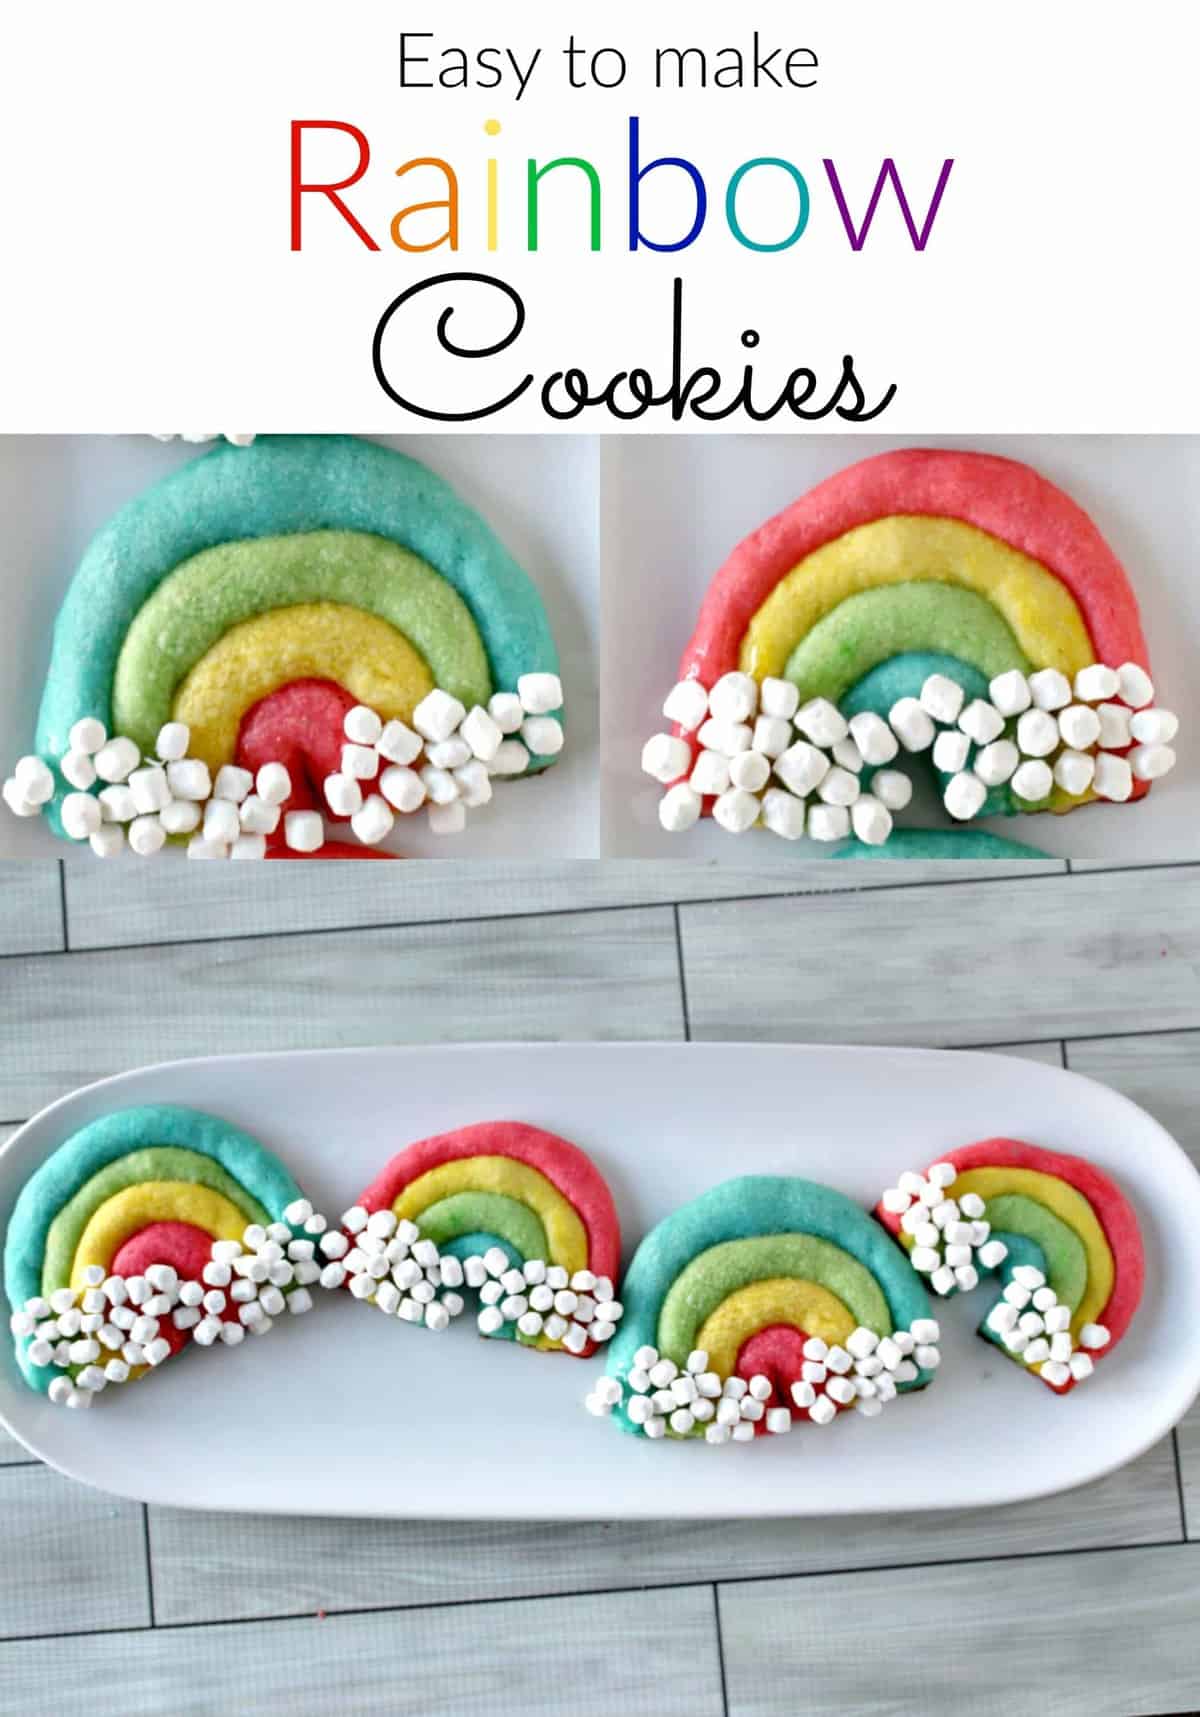 Easy to make Rainbow Cookies